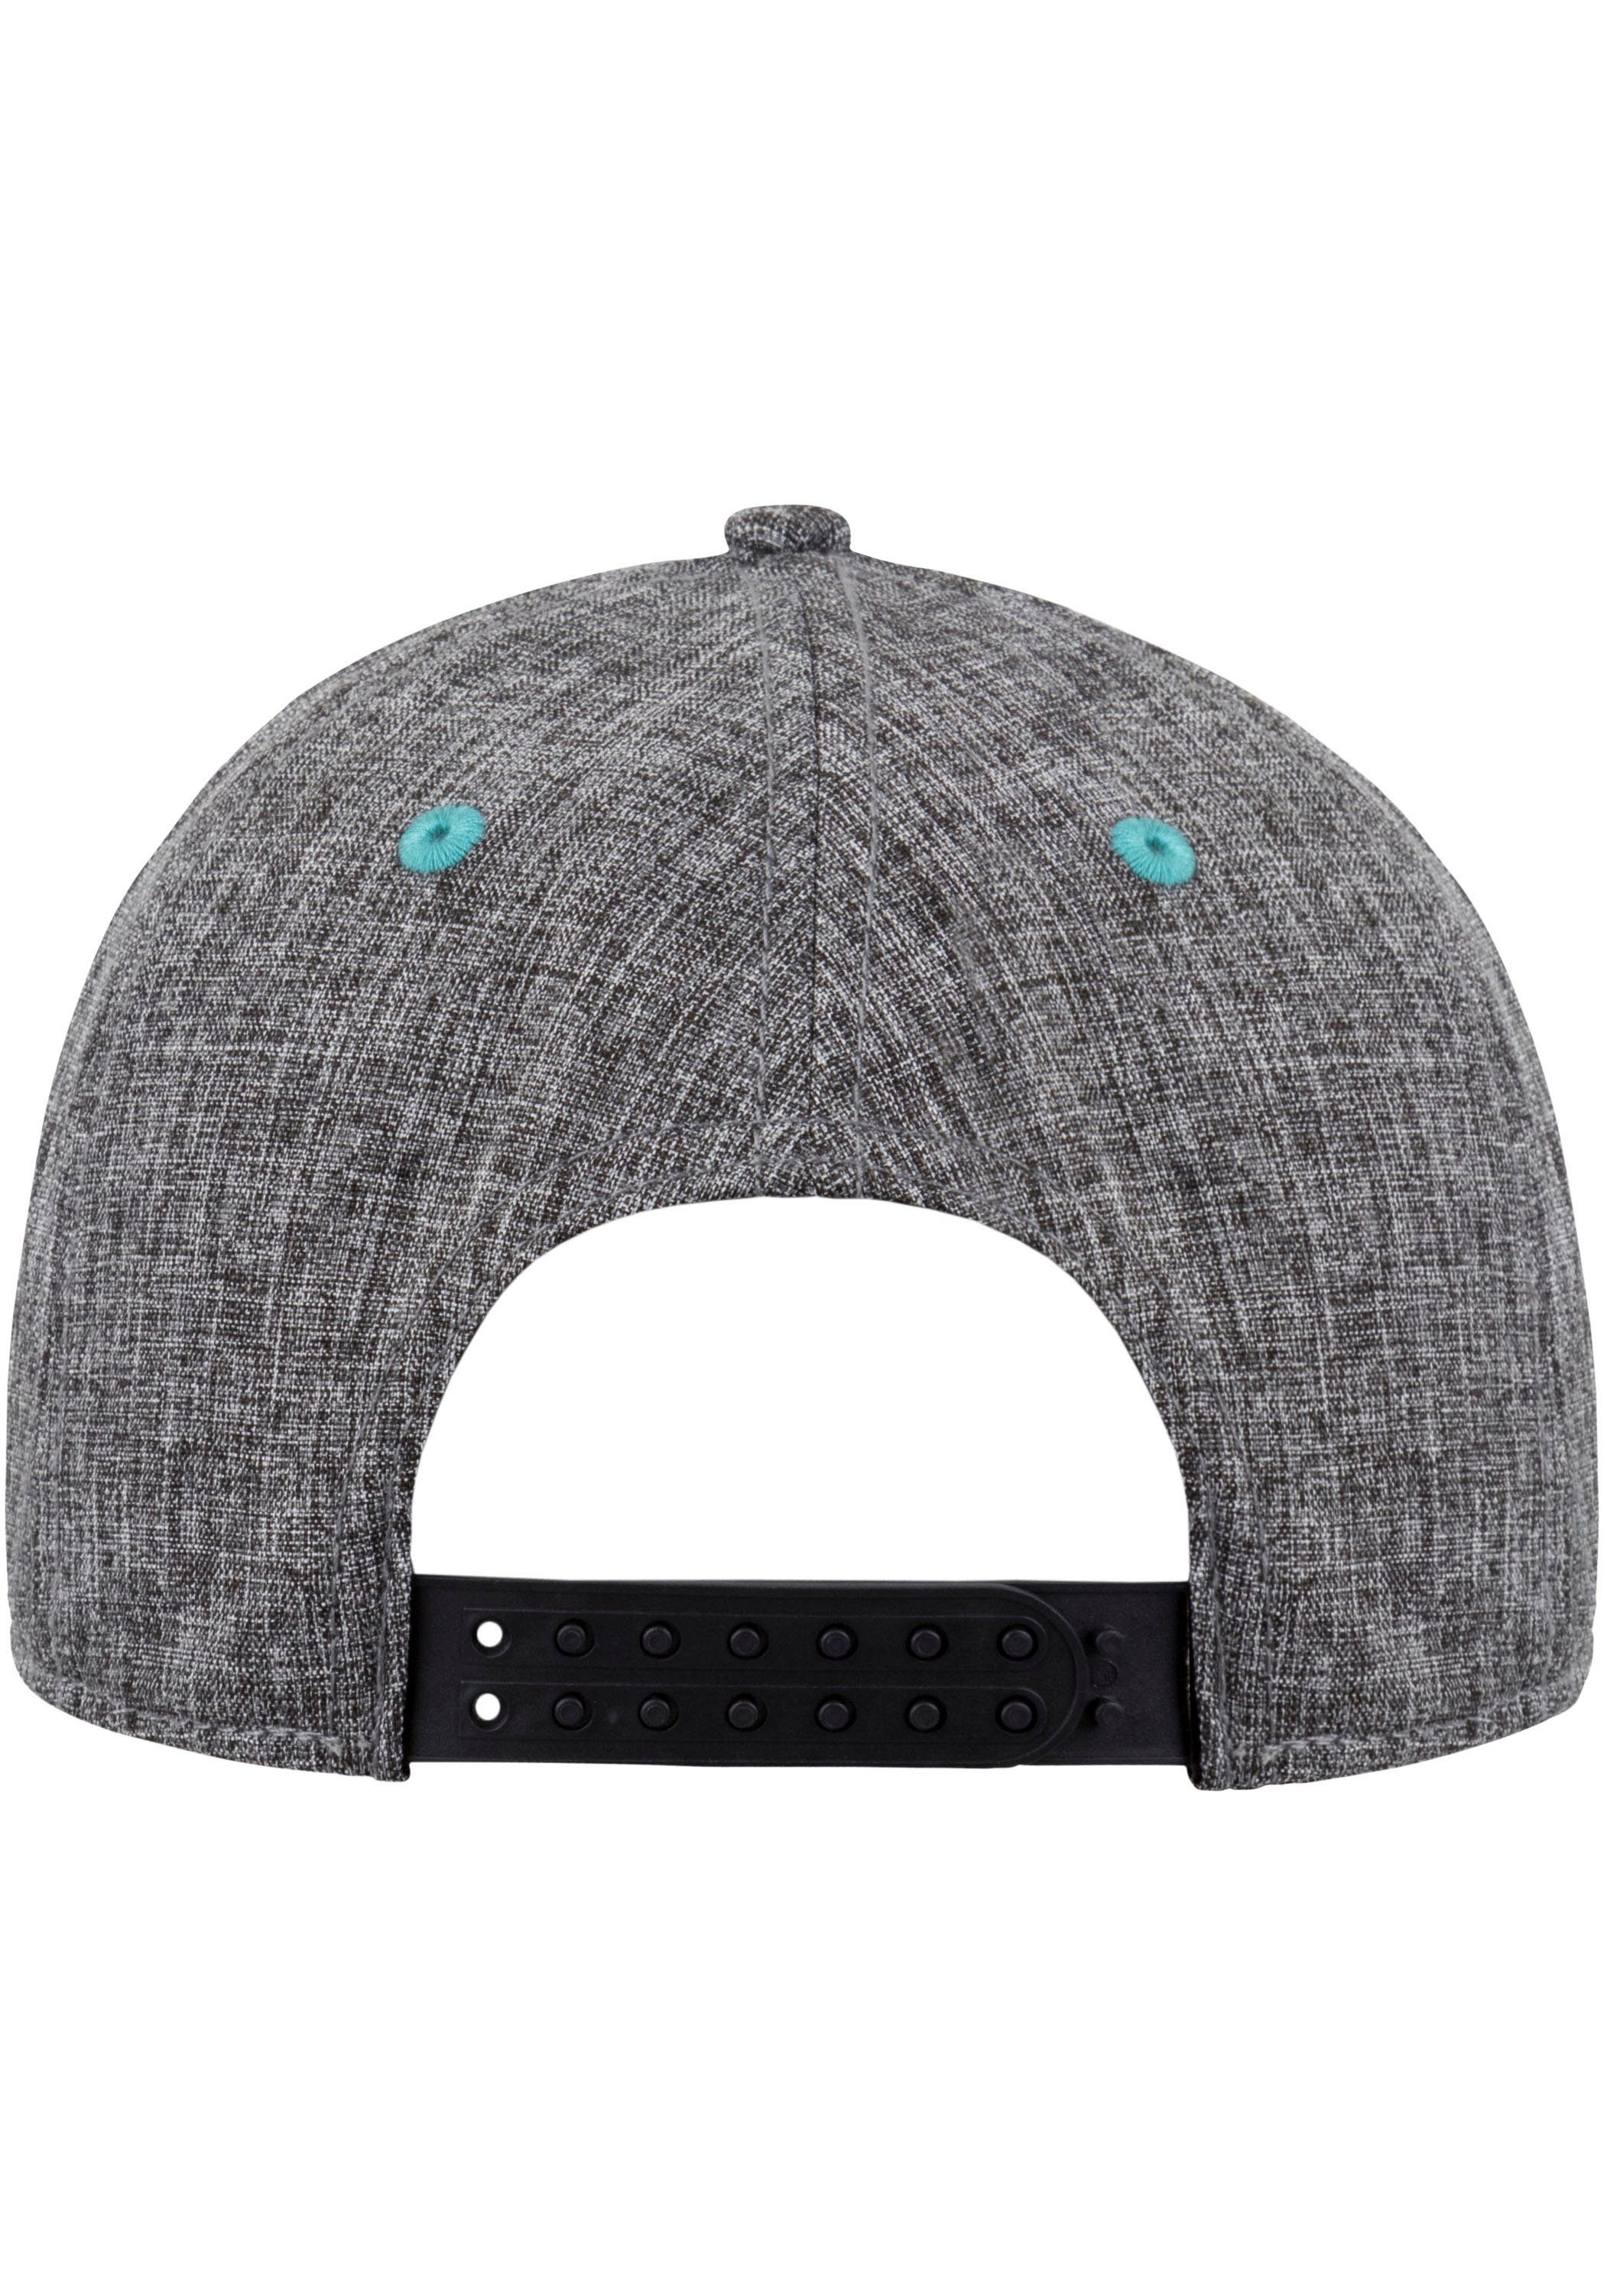 chillouts Cap Baseball Christchurch grau-türkis Hat